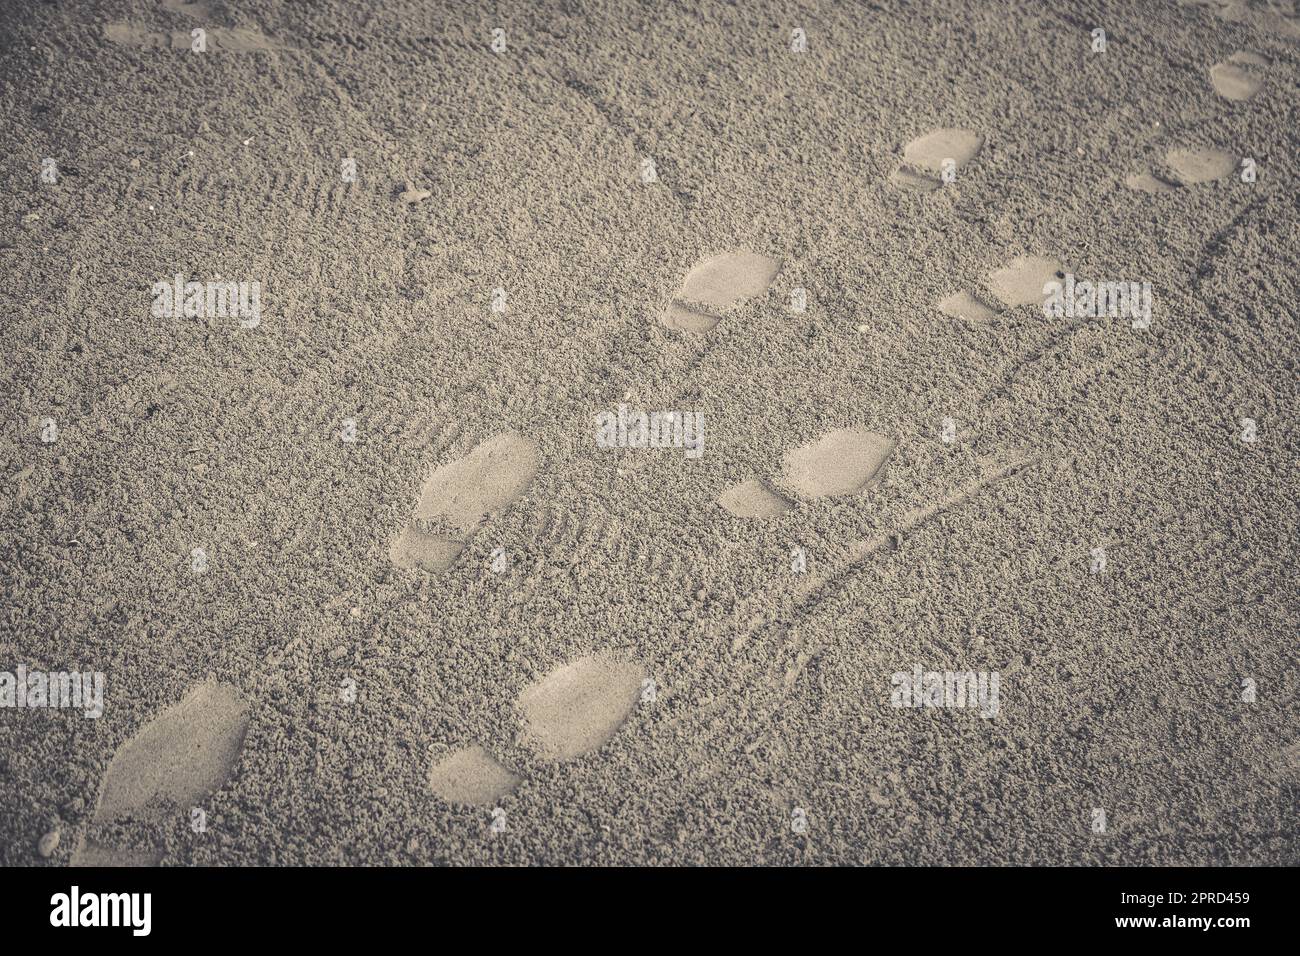 Footprint on sand beach background Stock Photo